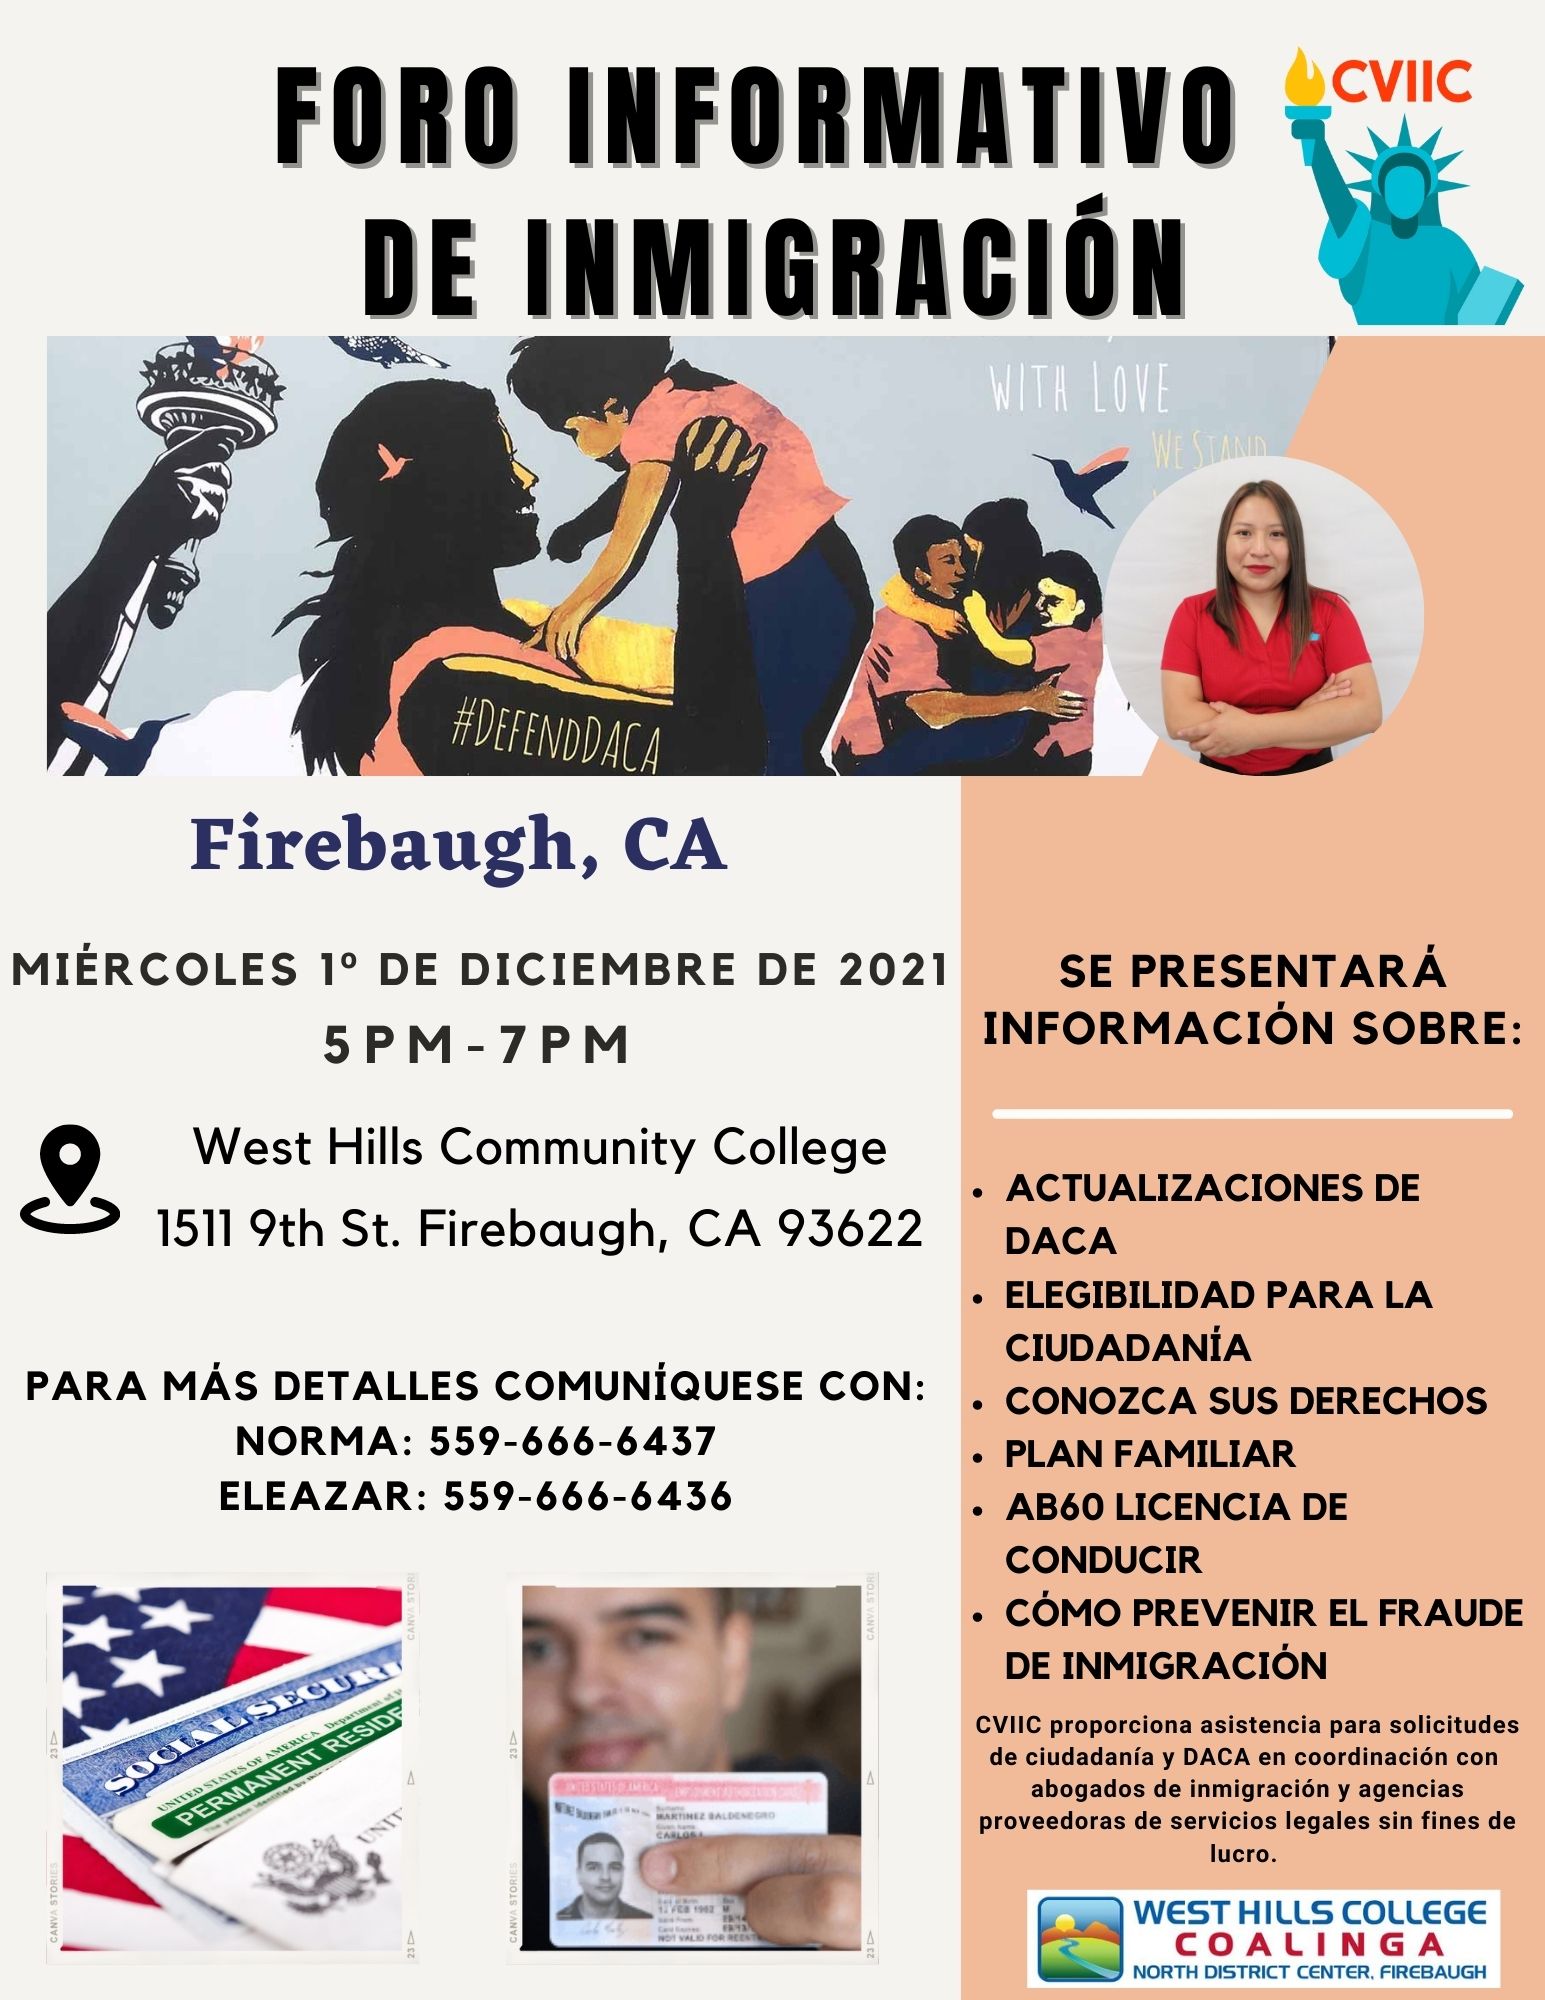 Foro Informativo de Inmigración en Firebaugh 1 Diciembre